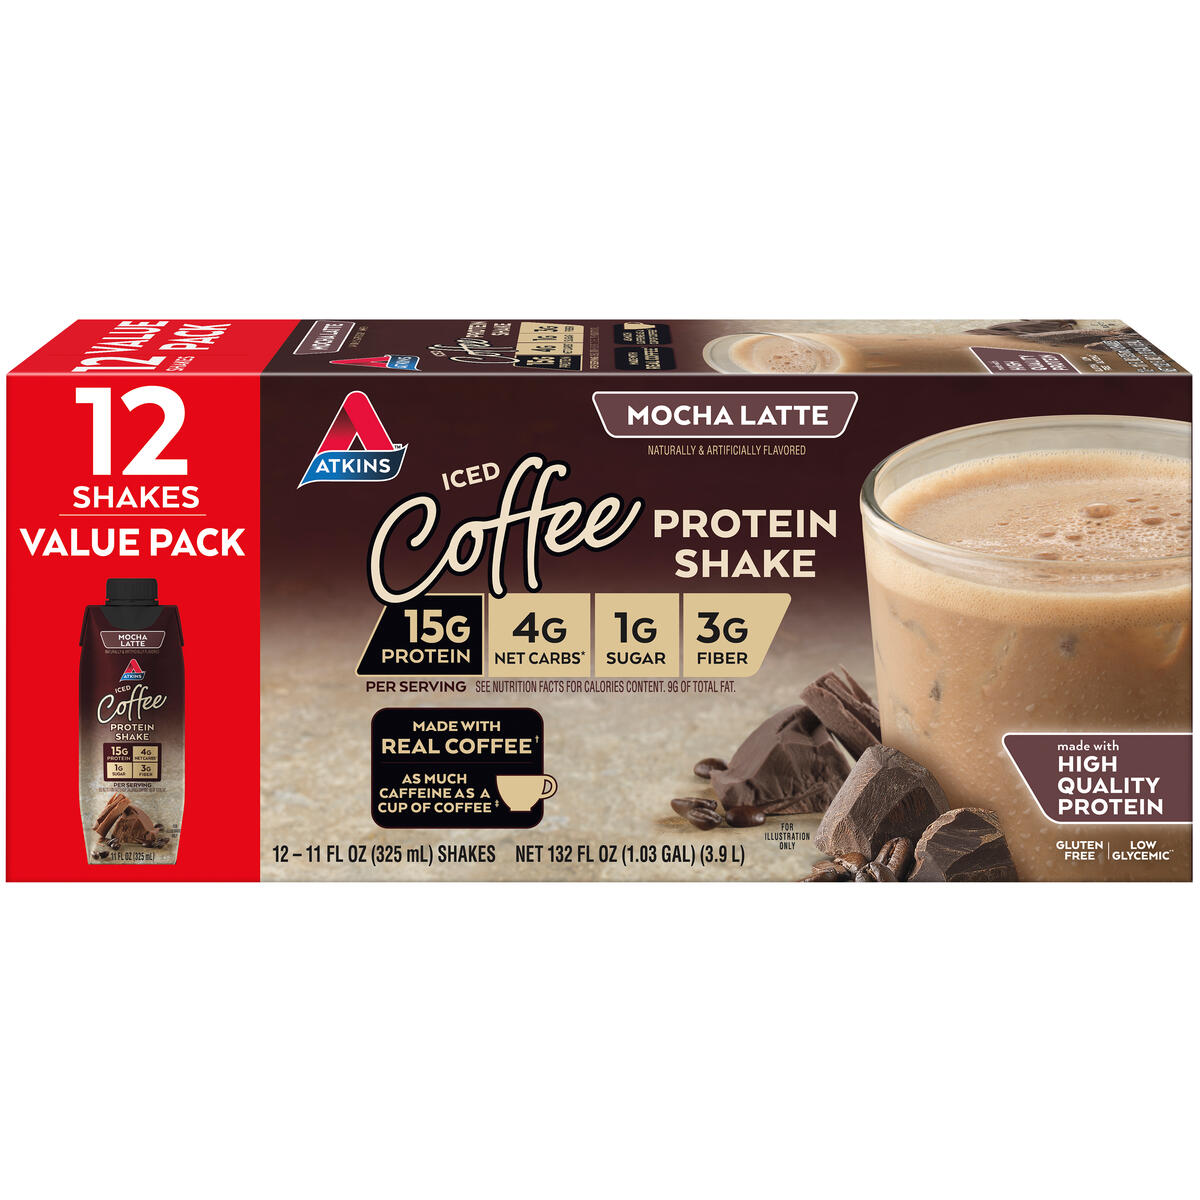 Atkins Mocha Latte Iced Coffee Protein Shake, Low Carb, Low Sugar, Keto Friendly, 12 Ct - image 1 of 9